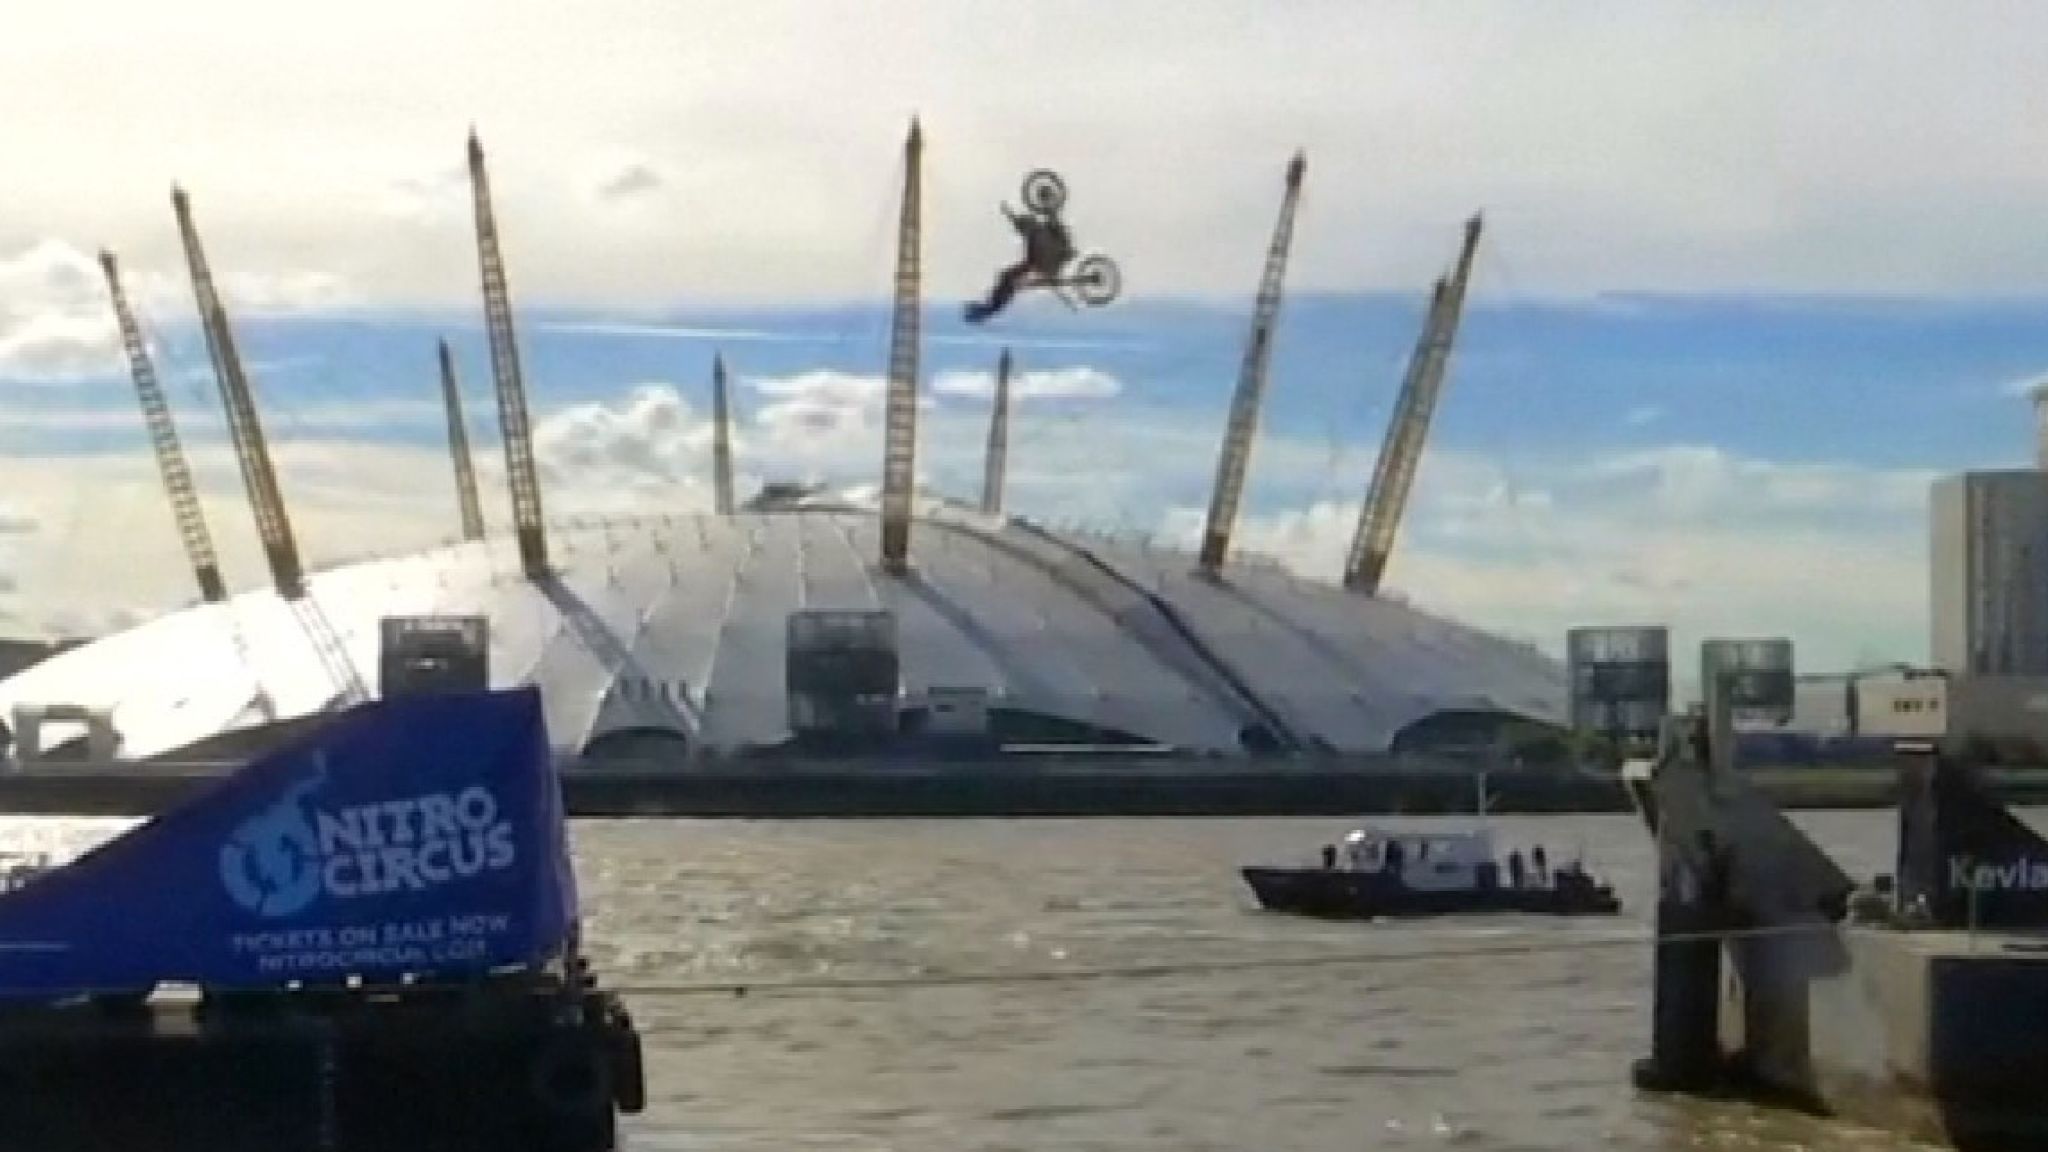 Motorbike Backflip Between Thames Barges - Nitro Circus , HD Wallpaper & Backgrounds